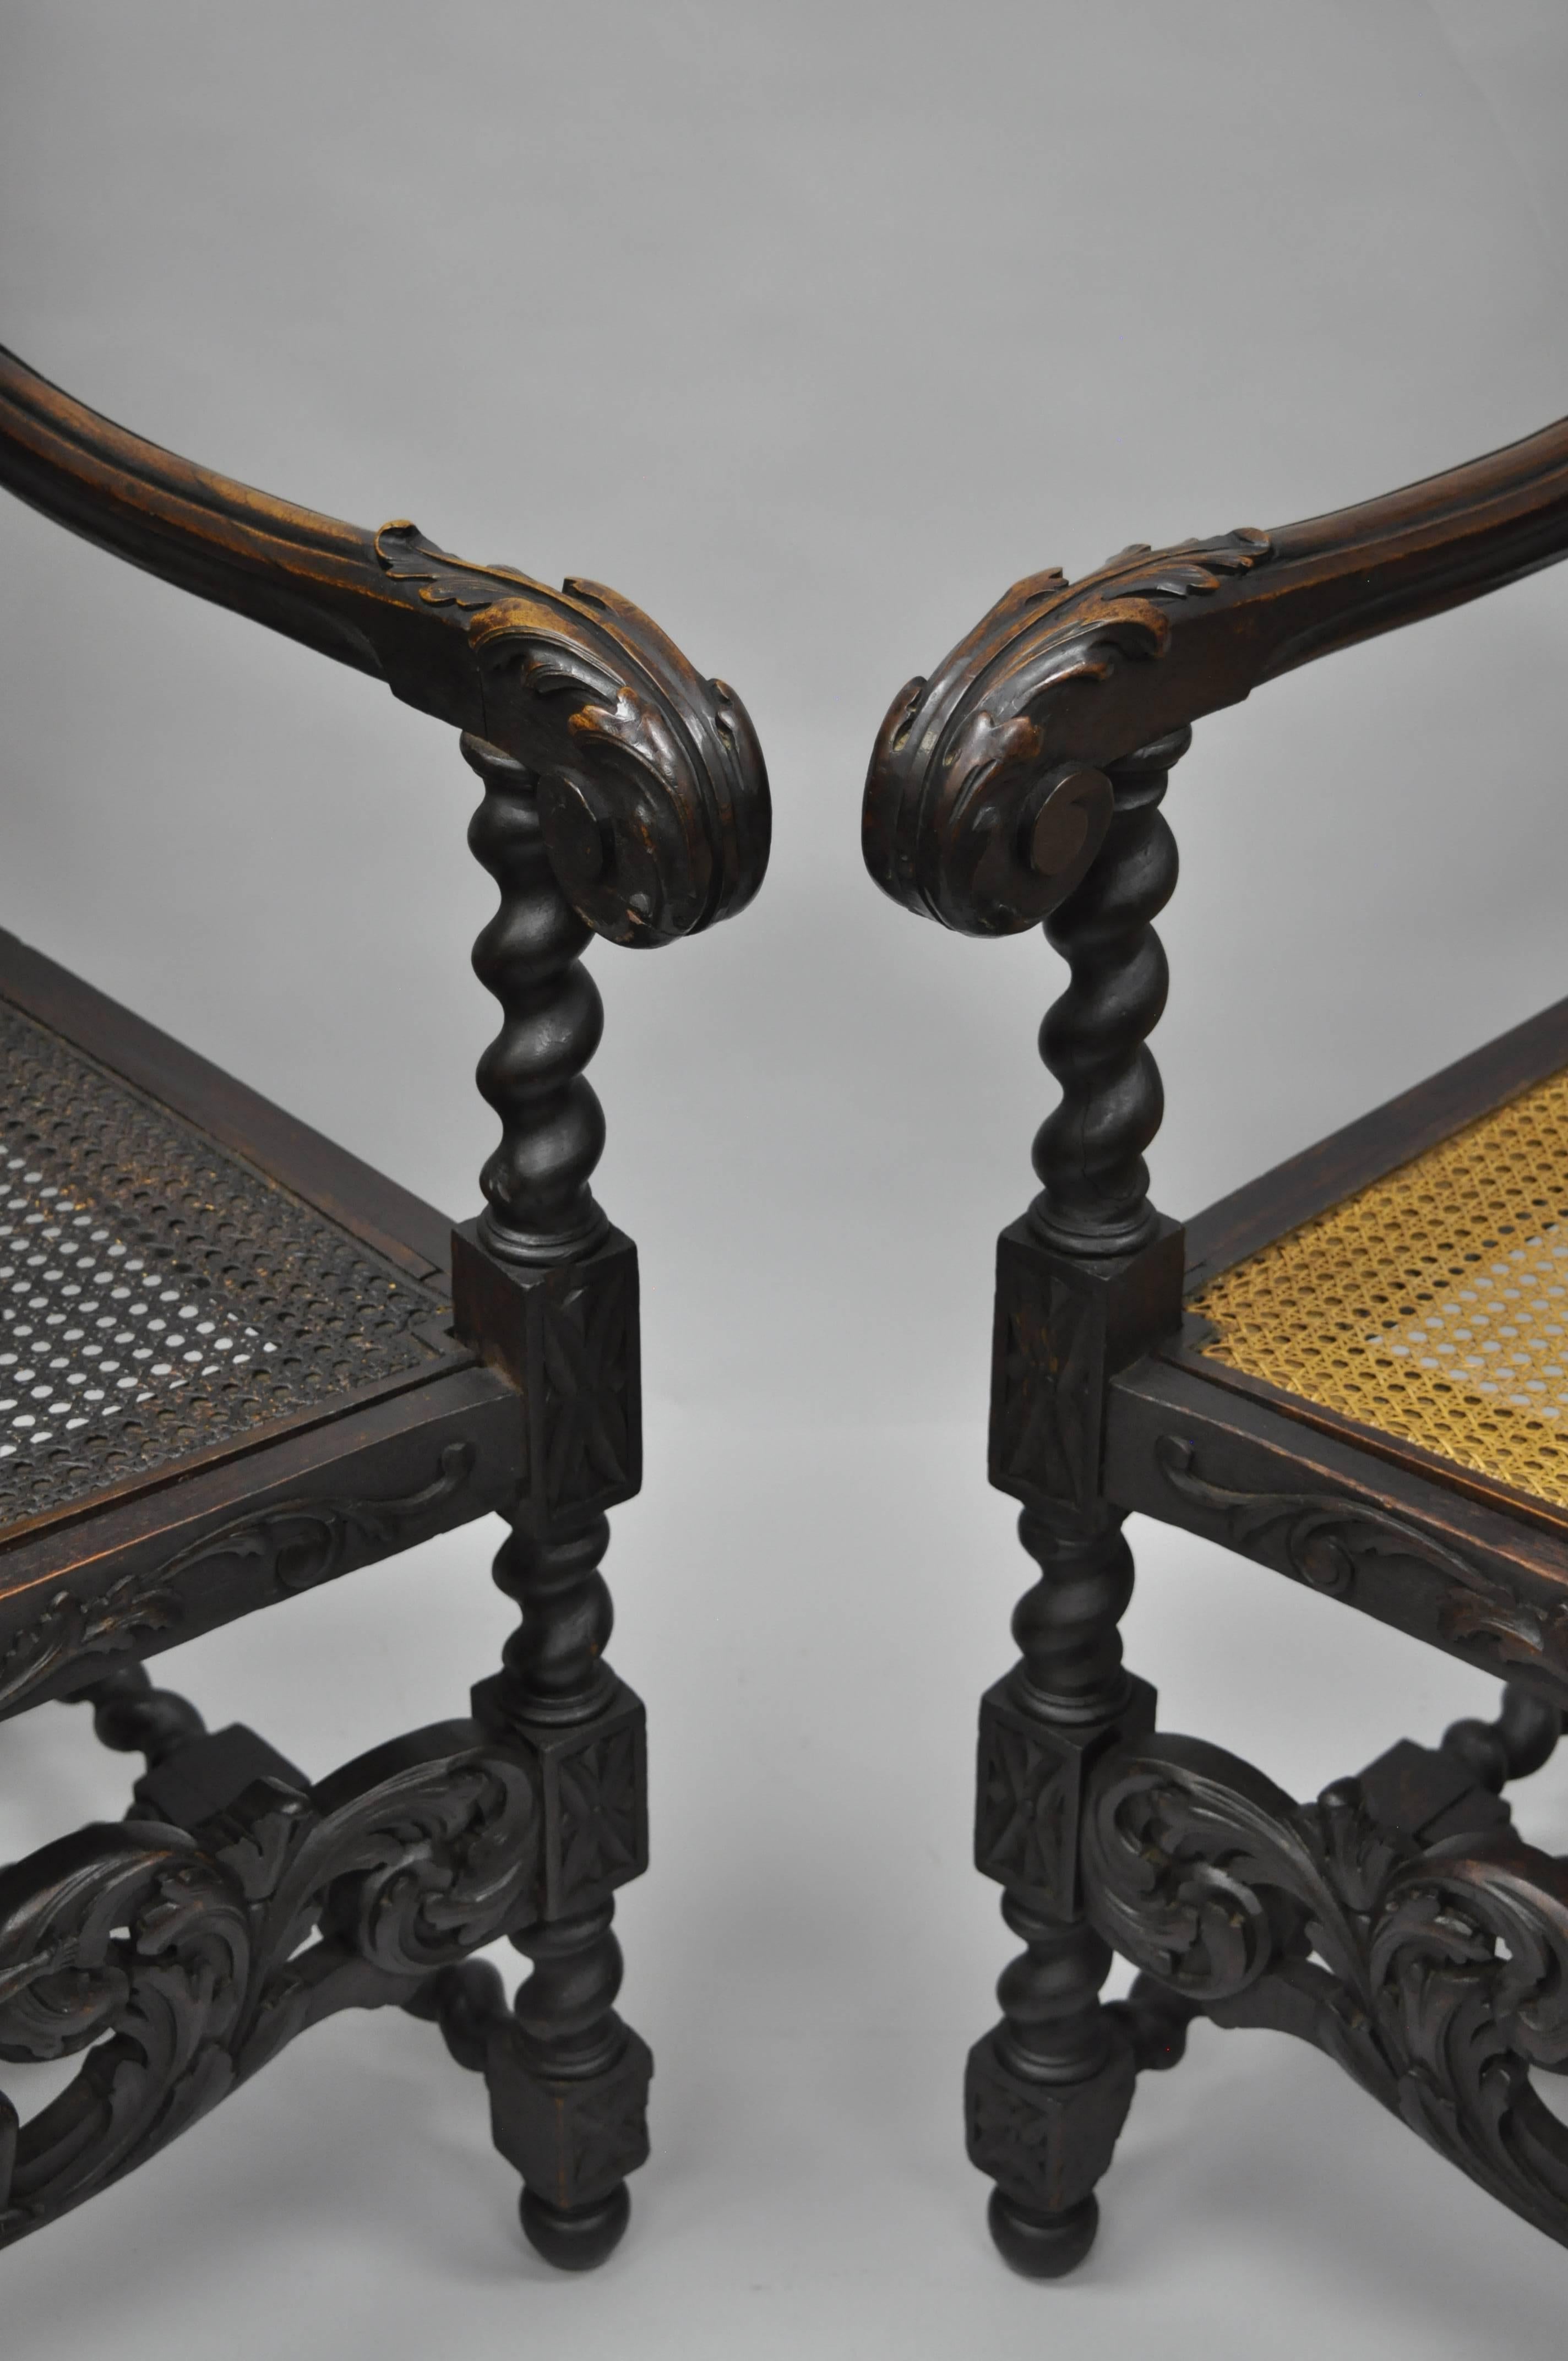 19th Century Jacobean Renaissance Revival Cherub Carved Parlor Throne Chairs Armchairs